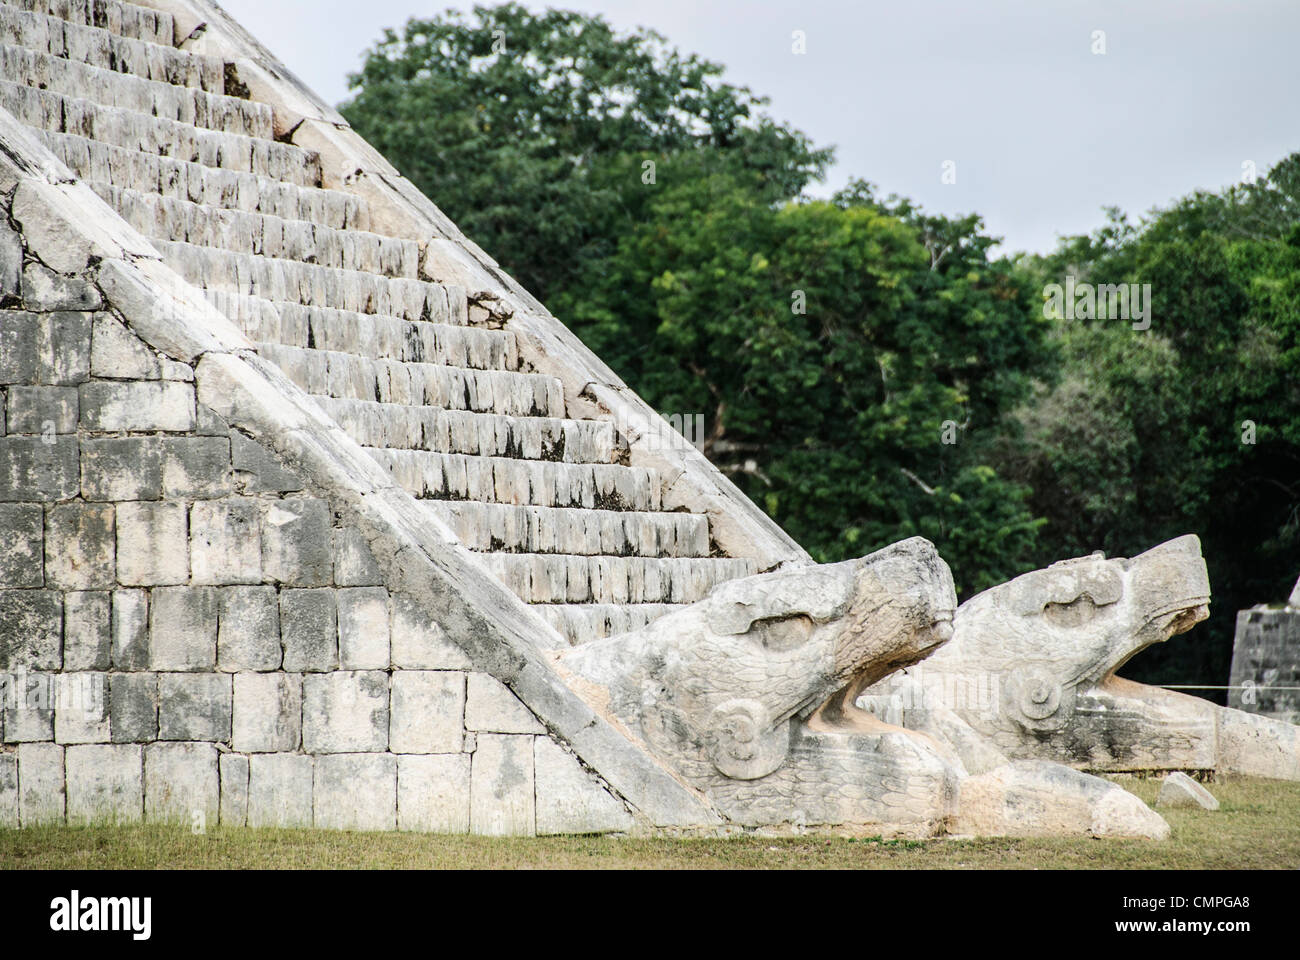 CHICHEN ITZA, Mexico - Bottom of the stairs of Temple of Kukulkan (El Castillo) at Chichen Itza Archeological Zone, ruins of a major Maya civilization city in the heart of Mexico's Yucatan Peninsula. Stock Photo